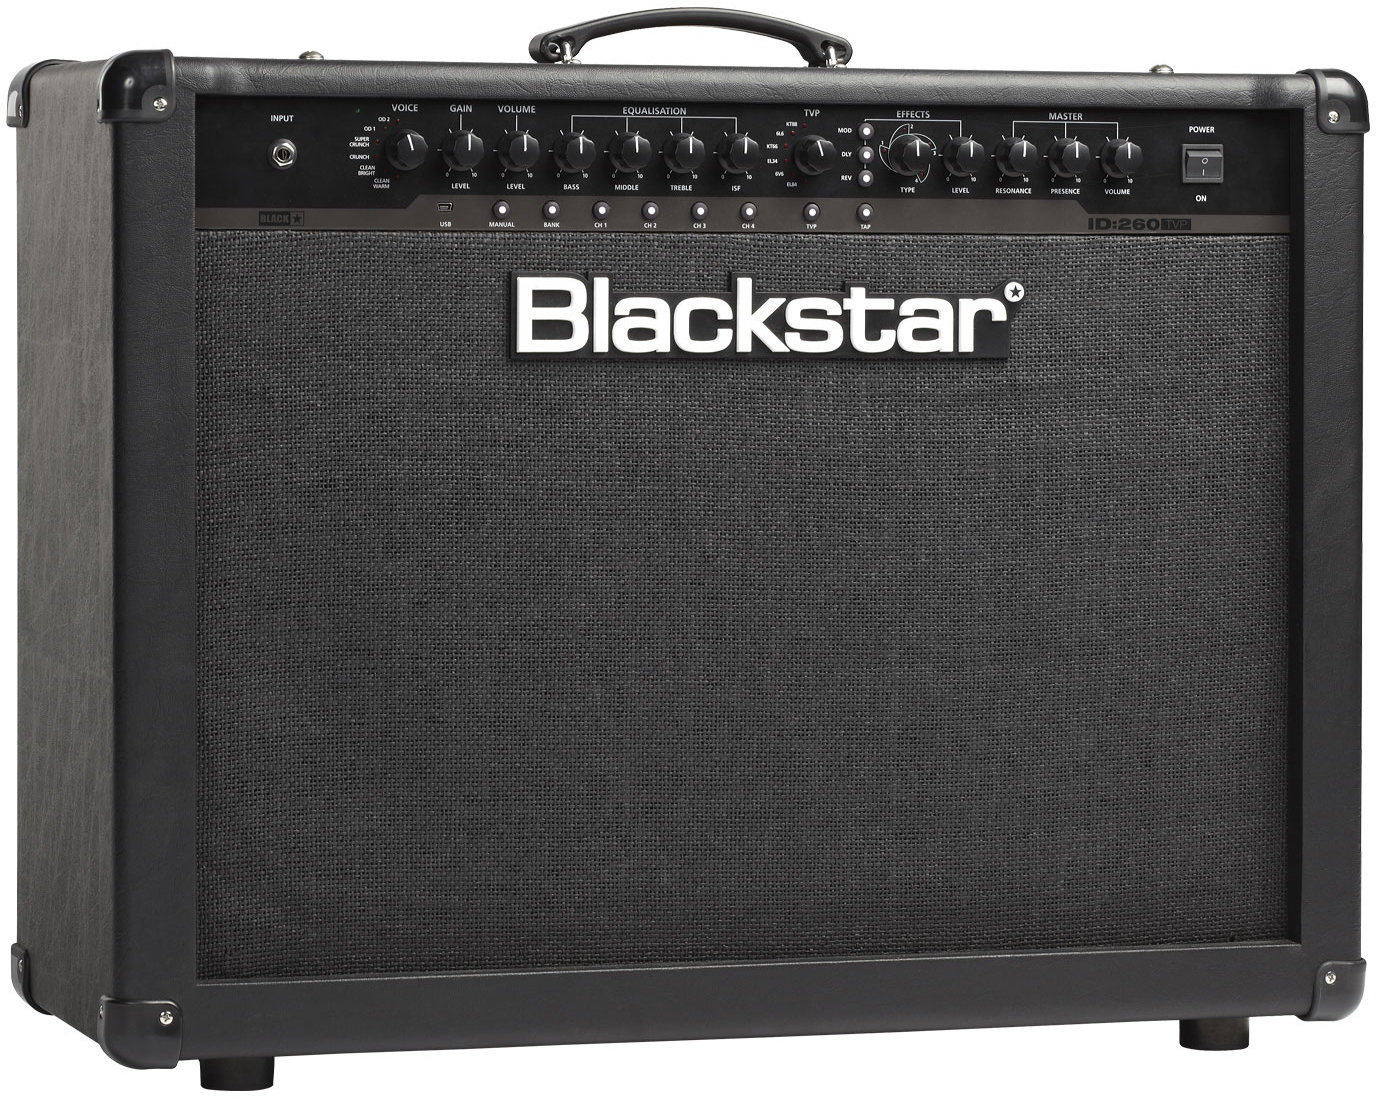 Modelling Gitarrencombo Blackstar ID: 260 TVP 2x12 Combo